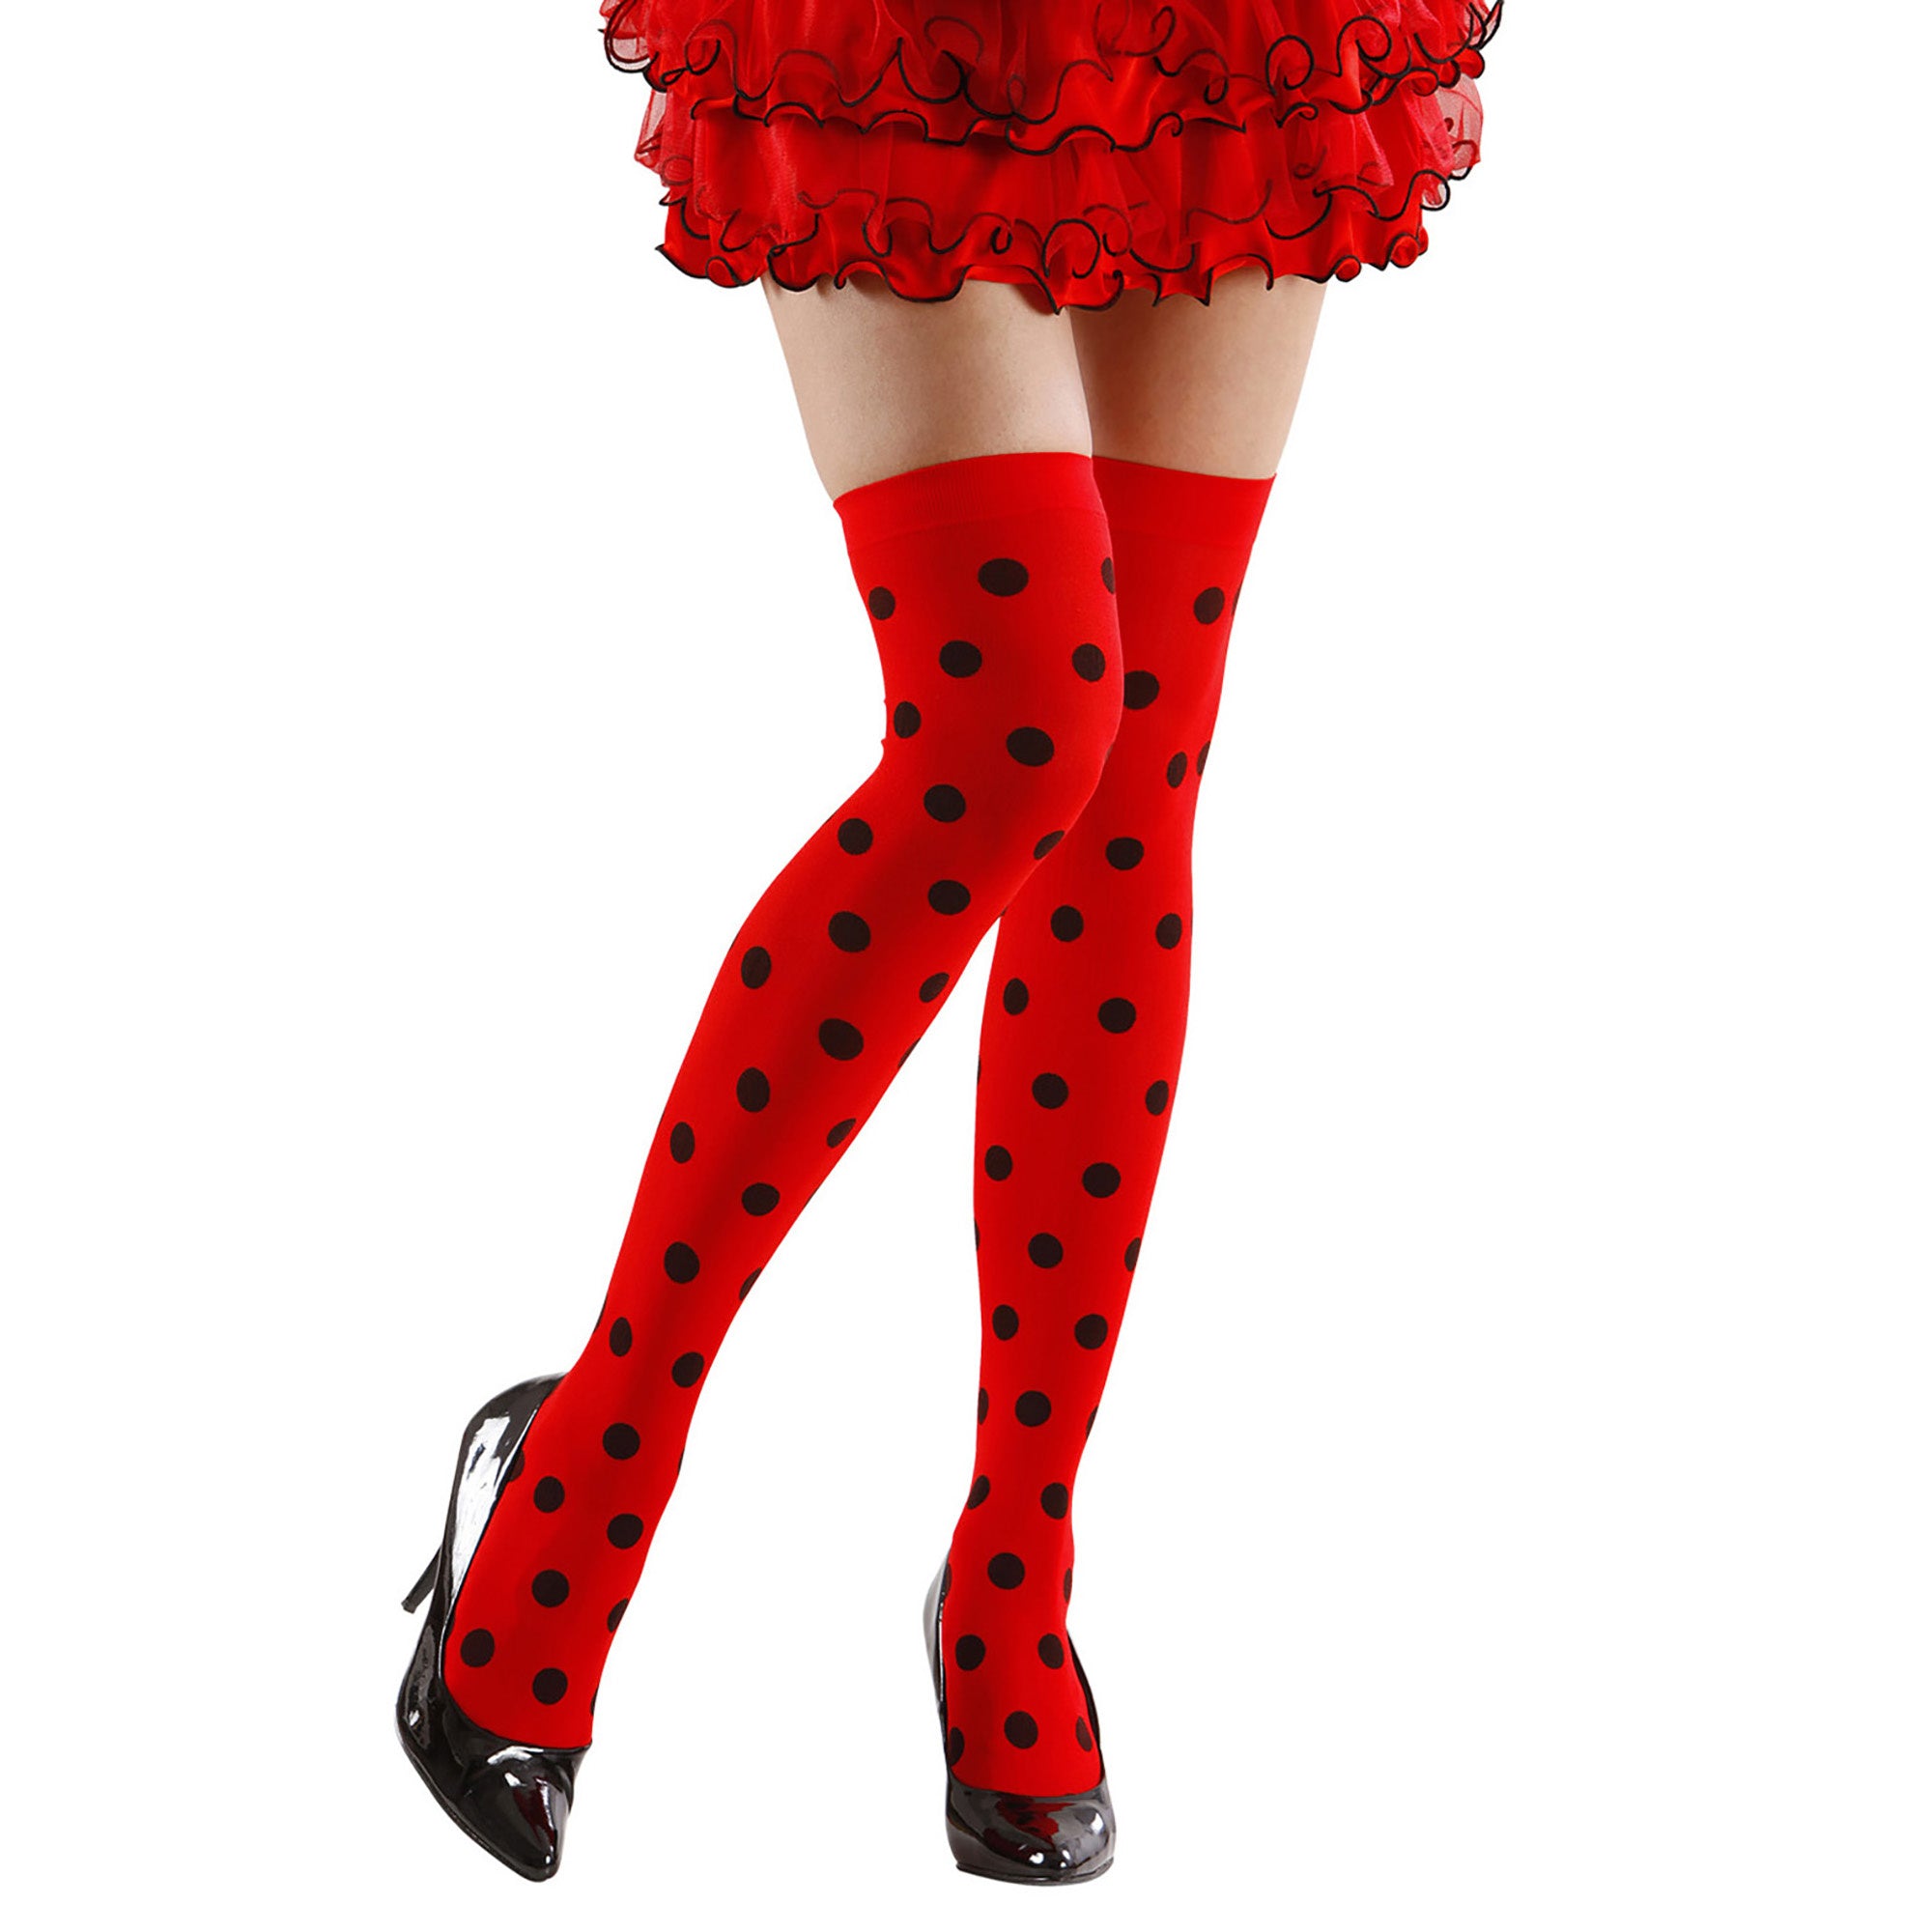 Widmann - Lieveheersbeest Kostuum - Kniekousen Lieveheersbeestje - rood - One Size - Carnavalskleding - Verkleedkleding